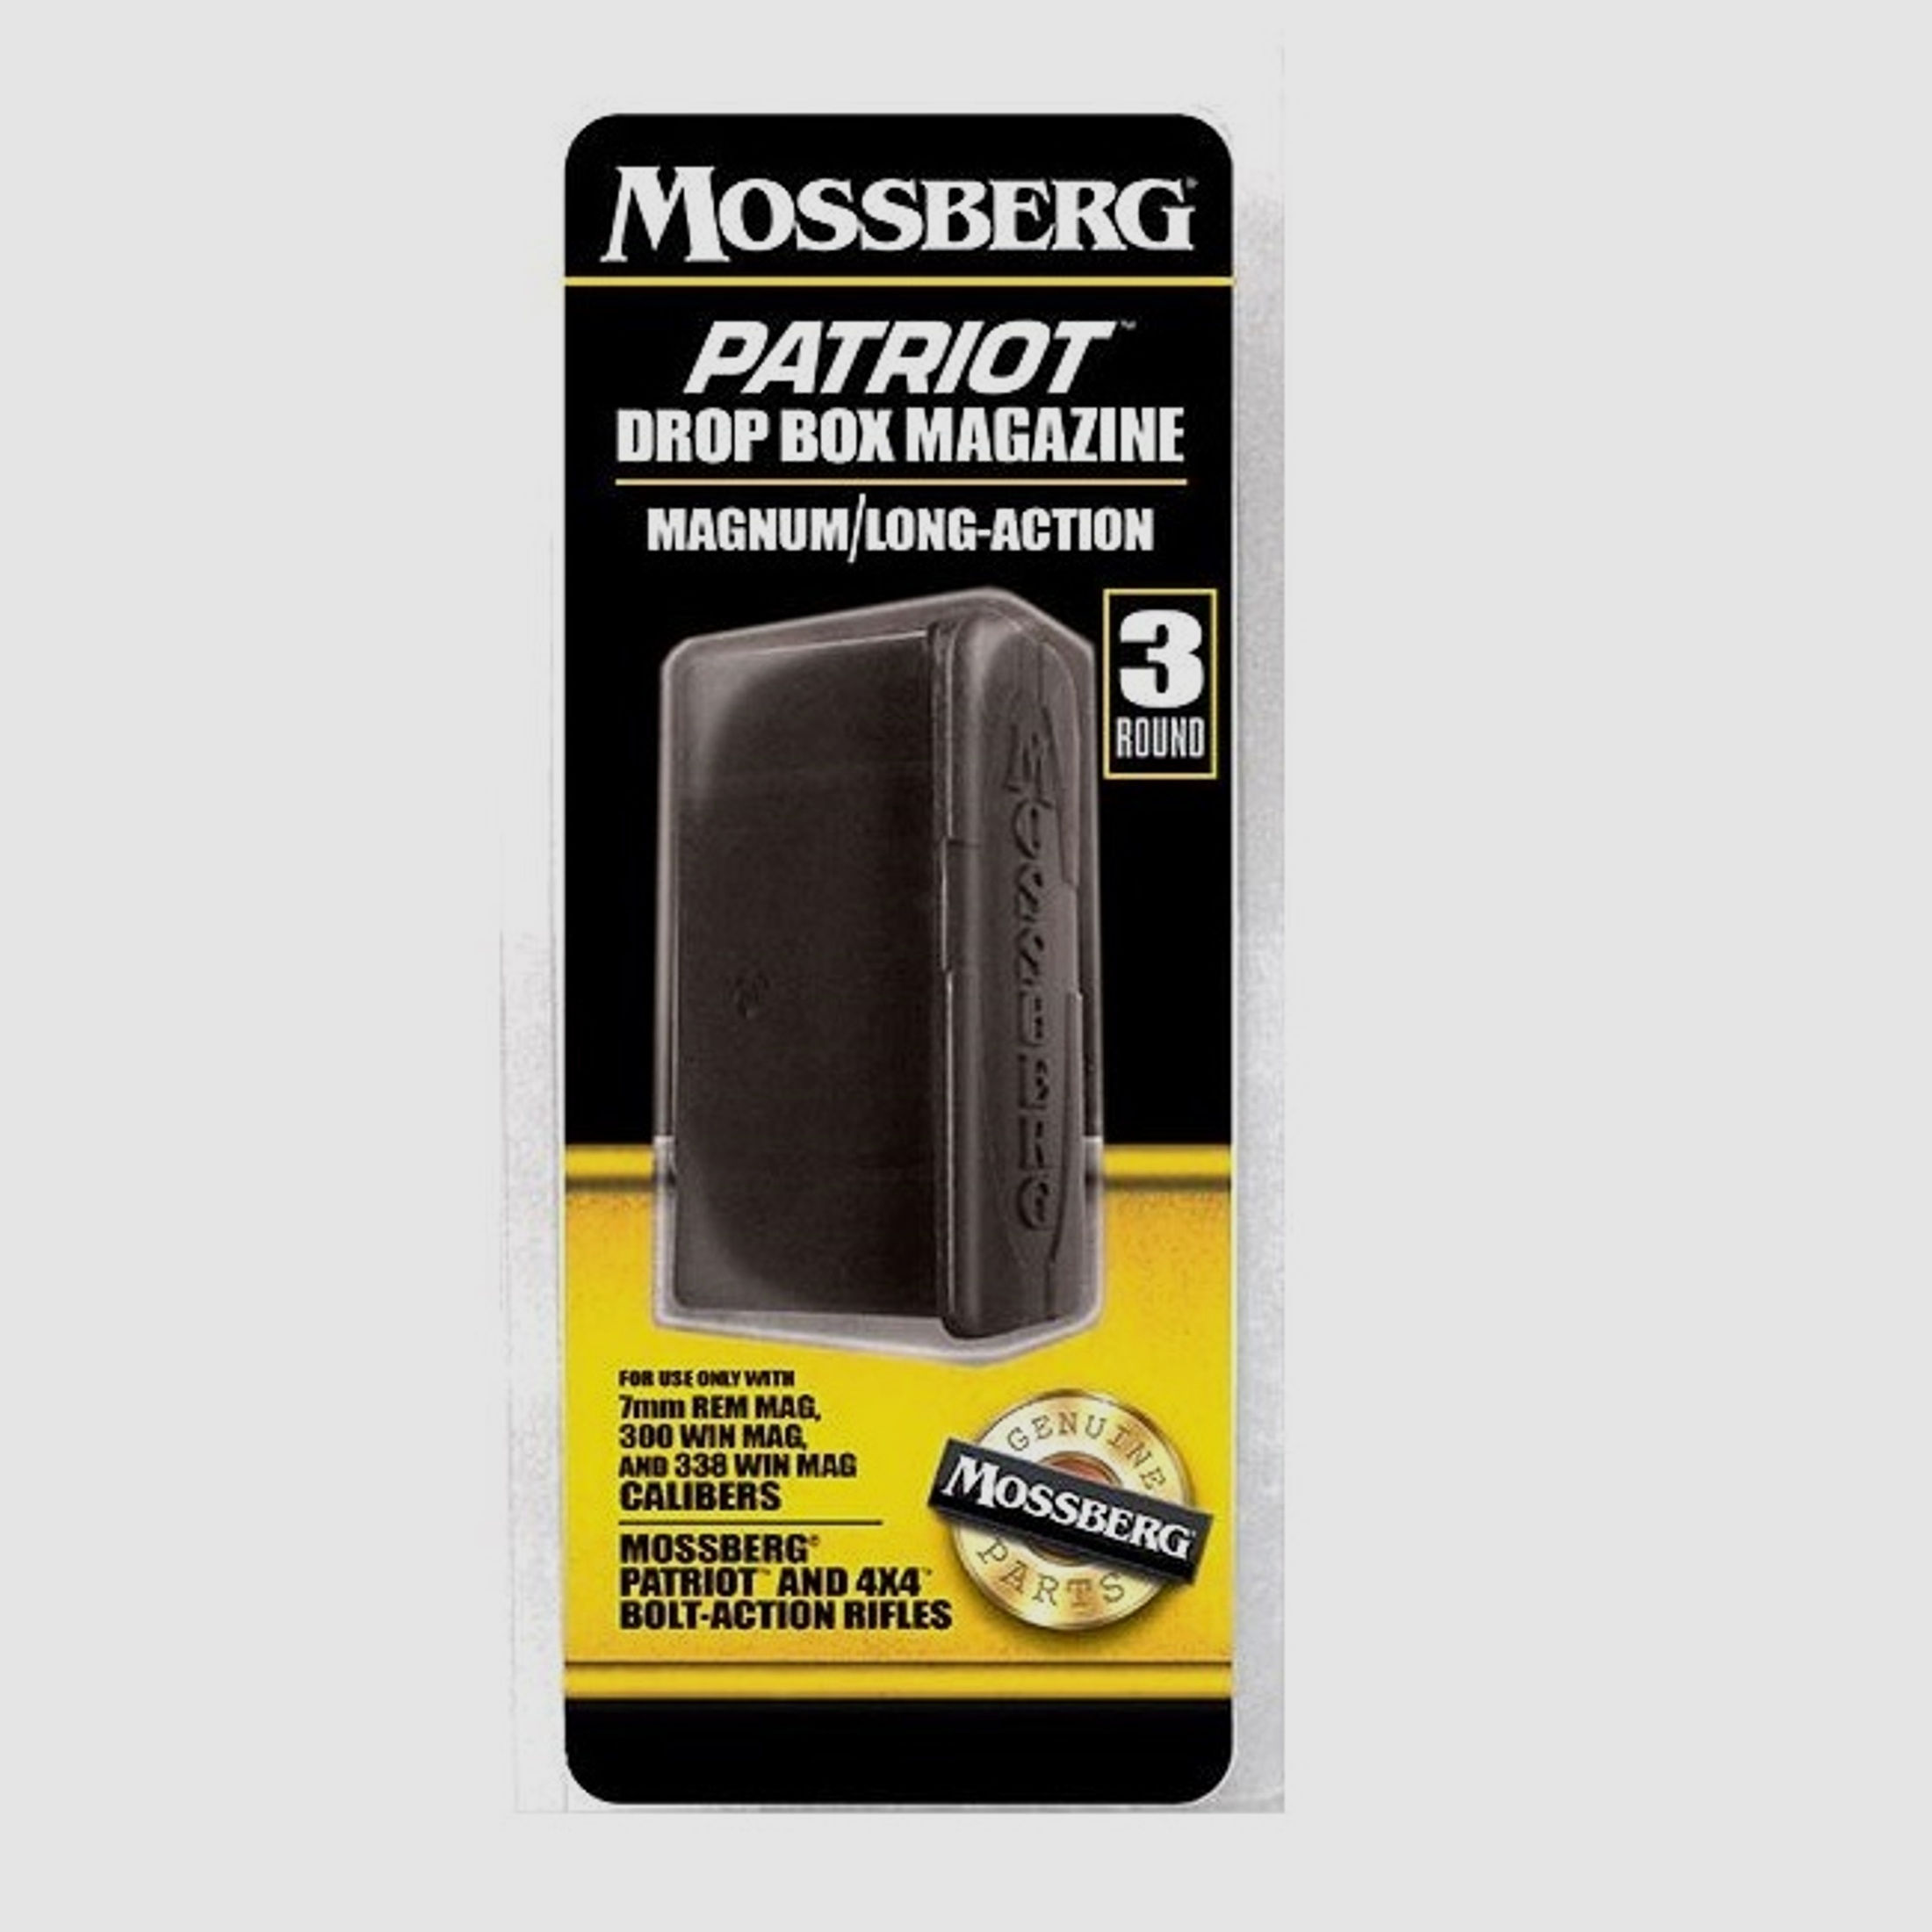 Mossberg Magazin 3 Patronen Patriot/4x4 Long